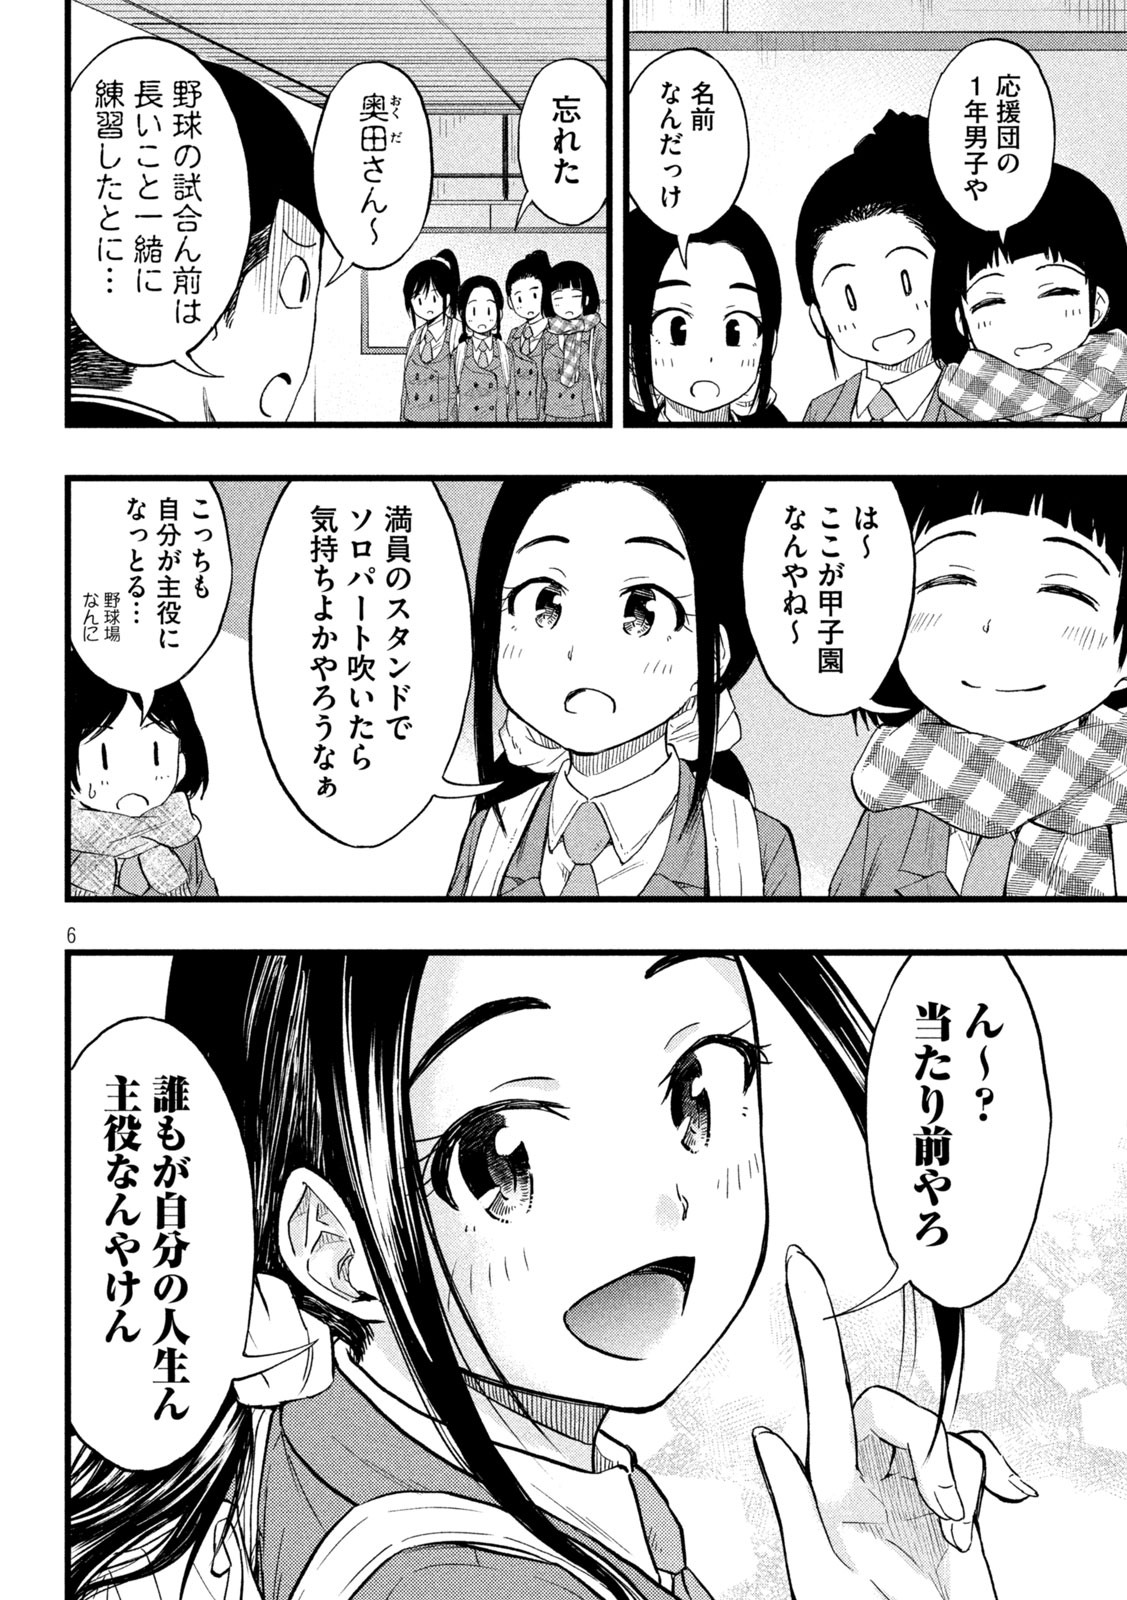 Koharu haru! - Chapter 69 - Page 2